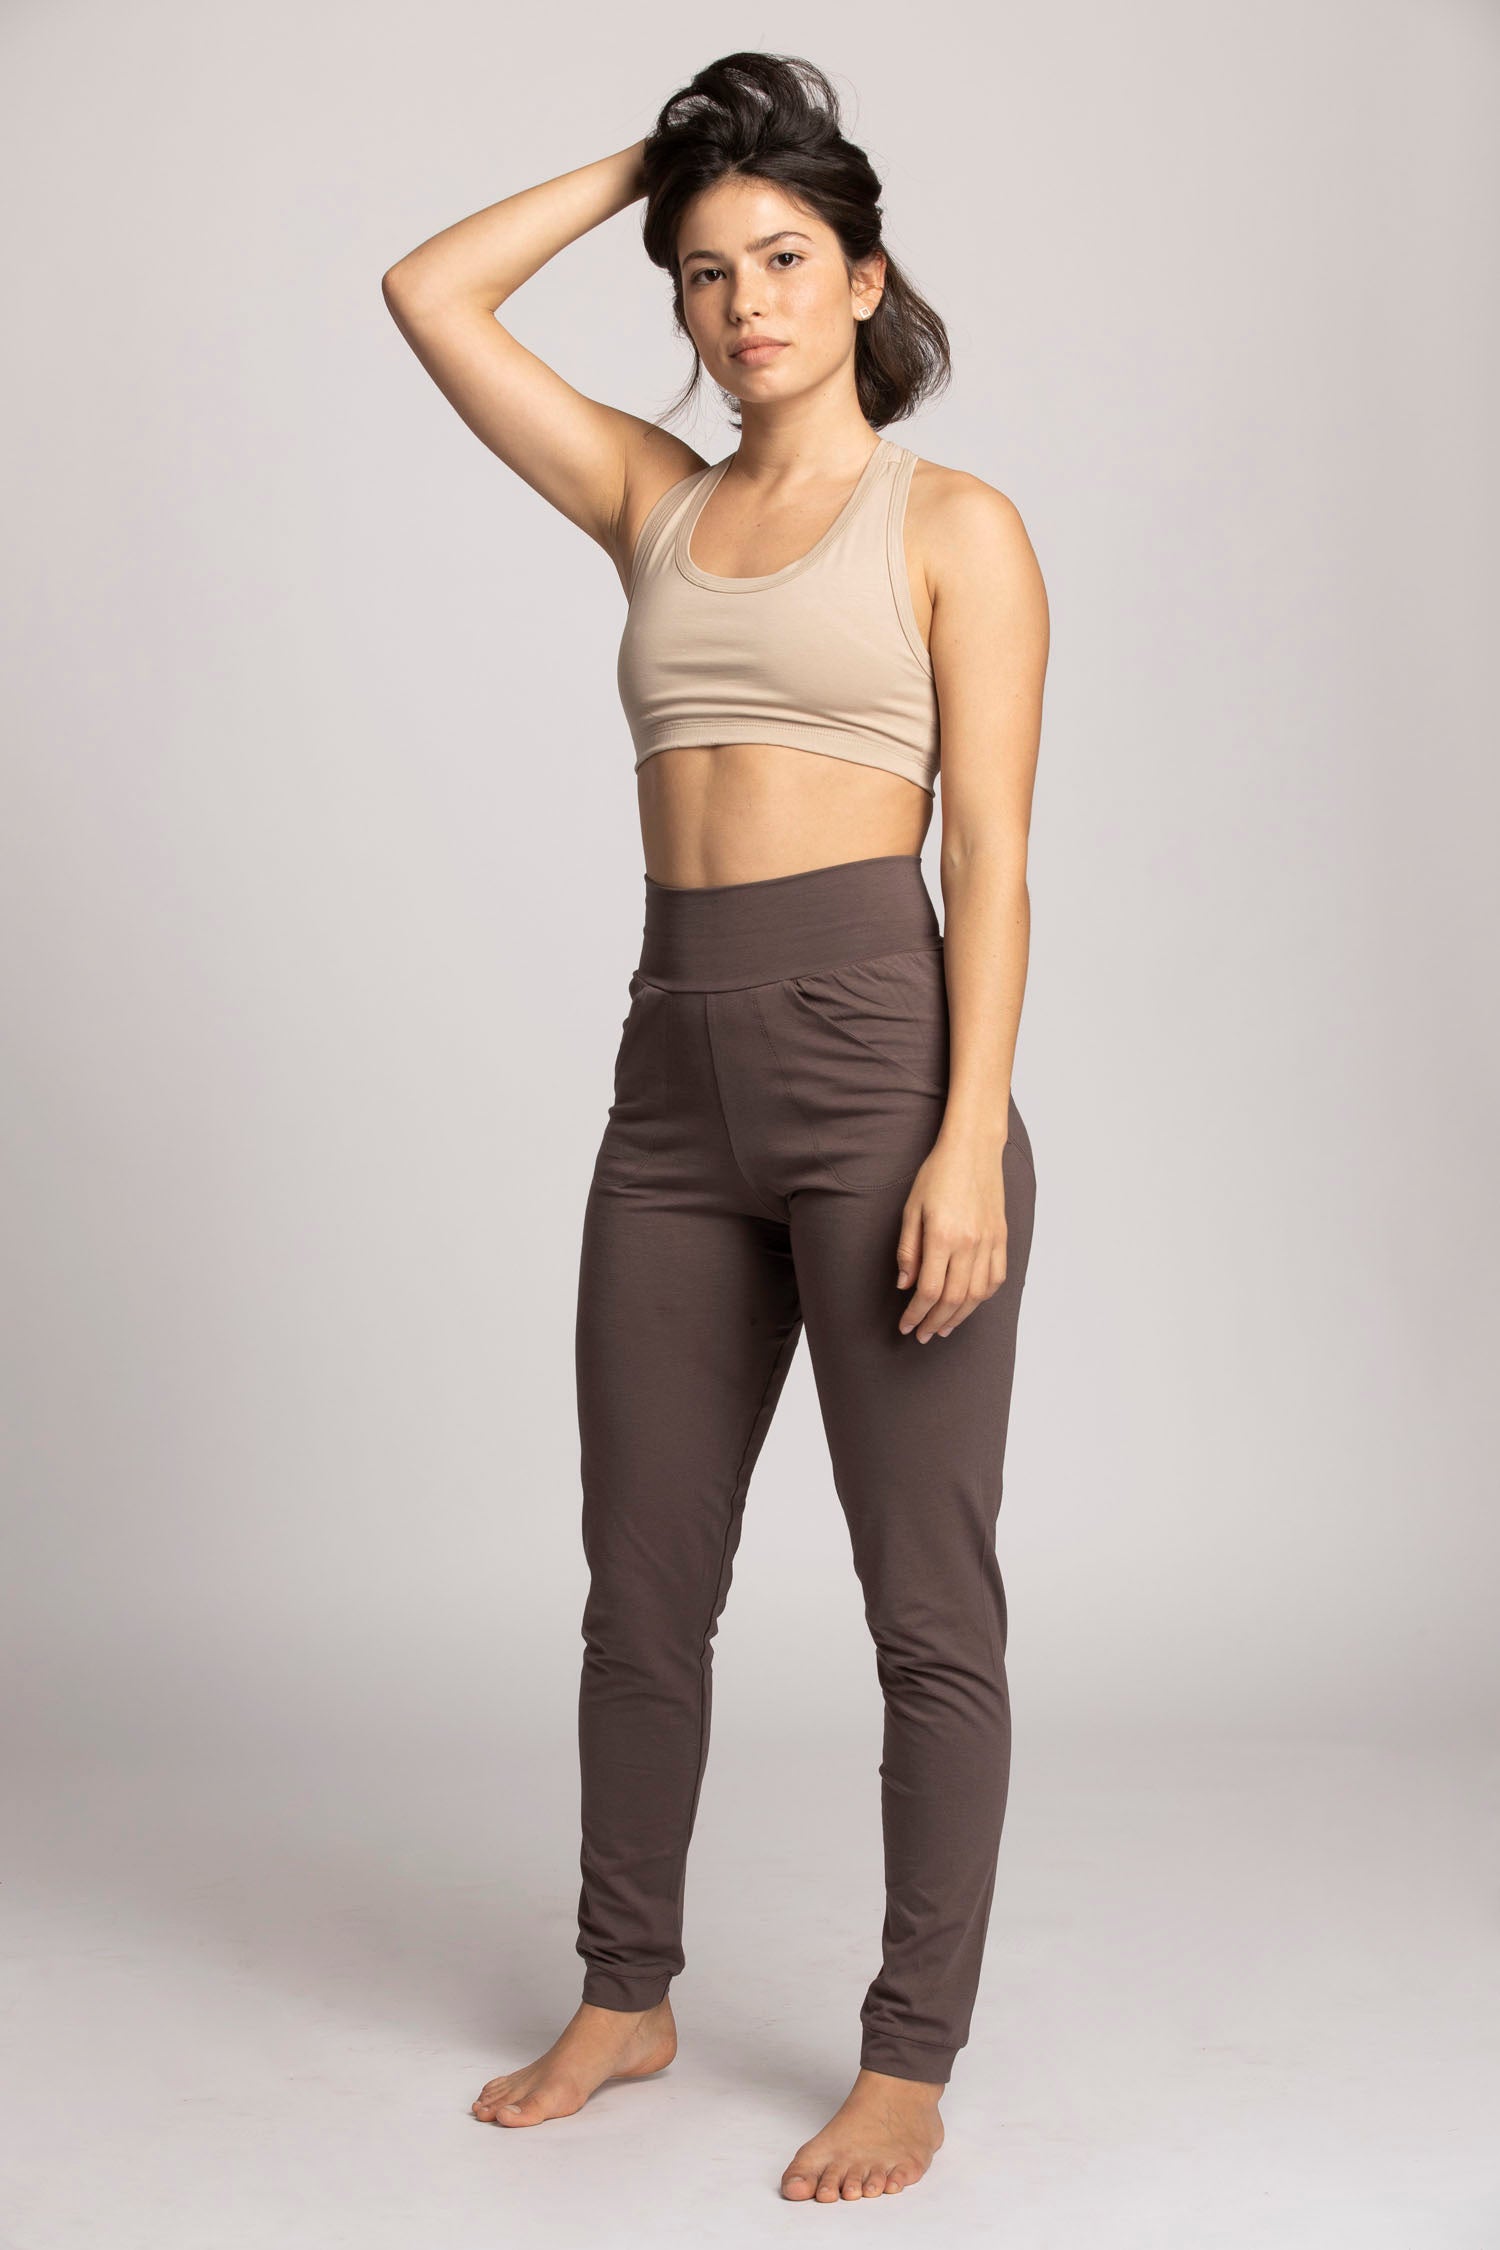 Yoga Tops for Women, Women's Fitness Tops, Yoga T-shirts